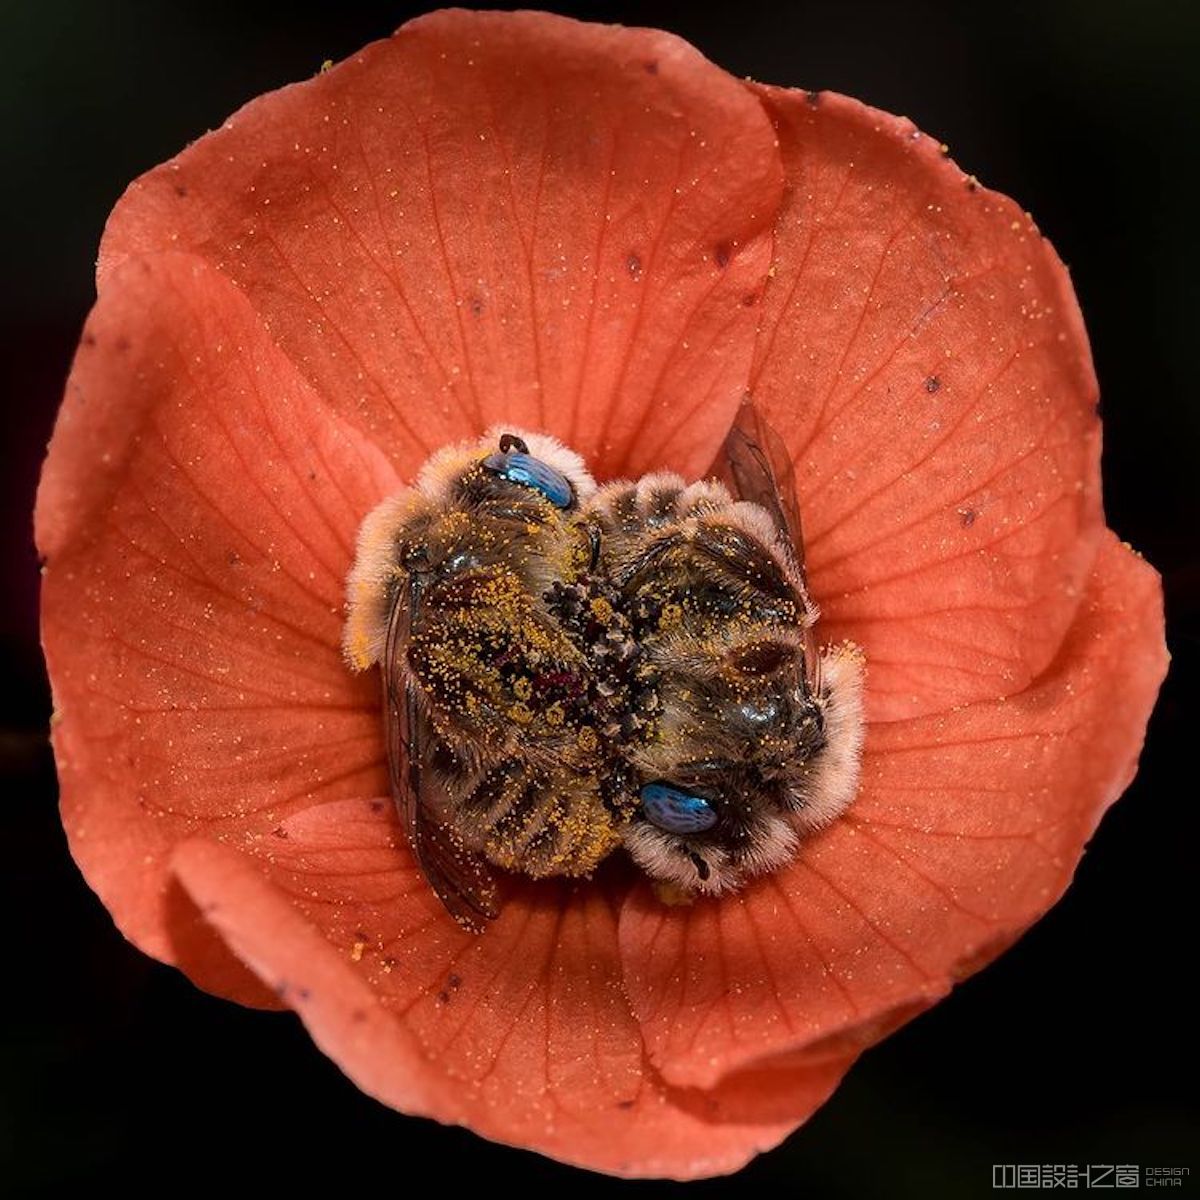 bees sleeping in a globe mallow flower